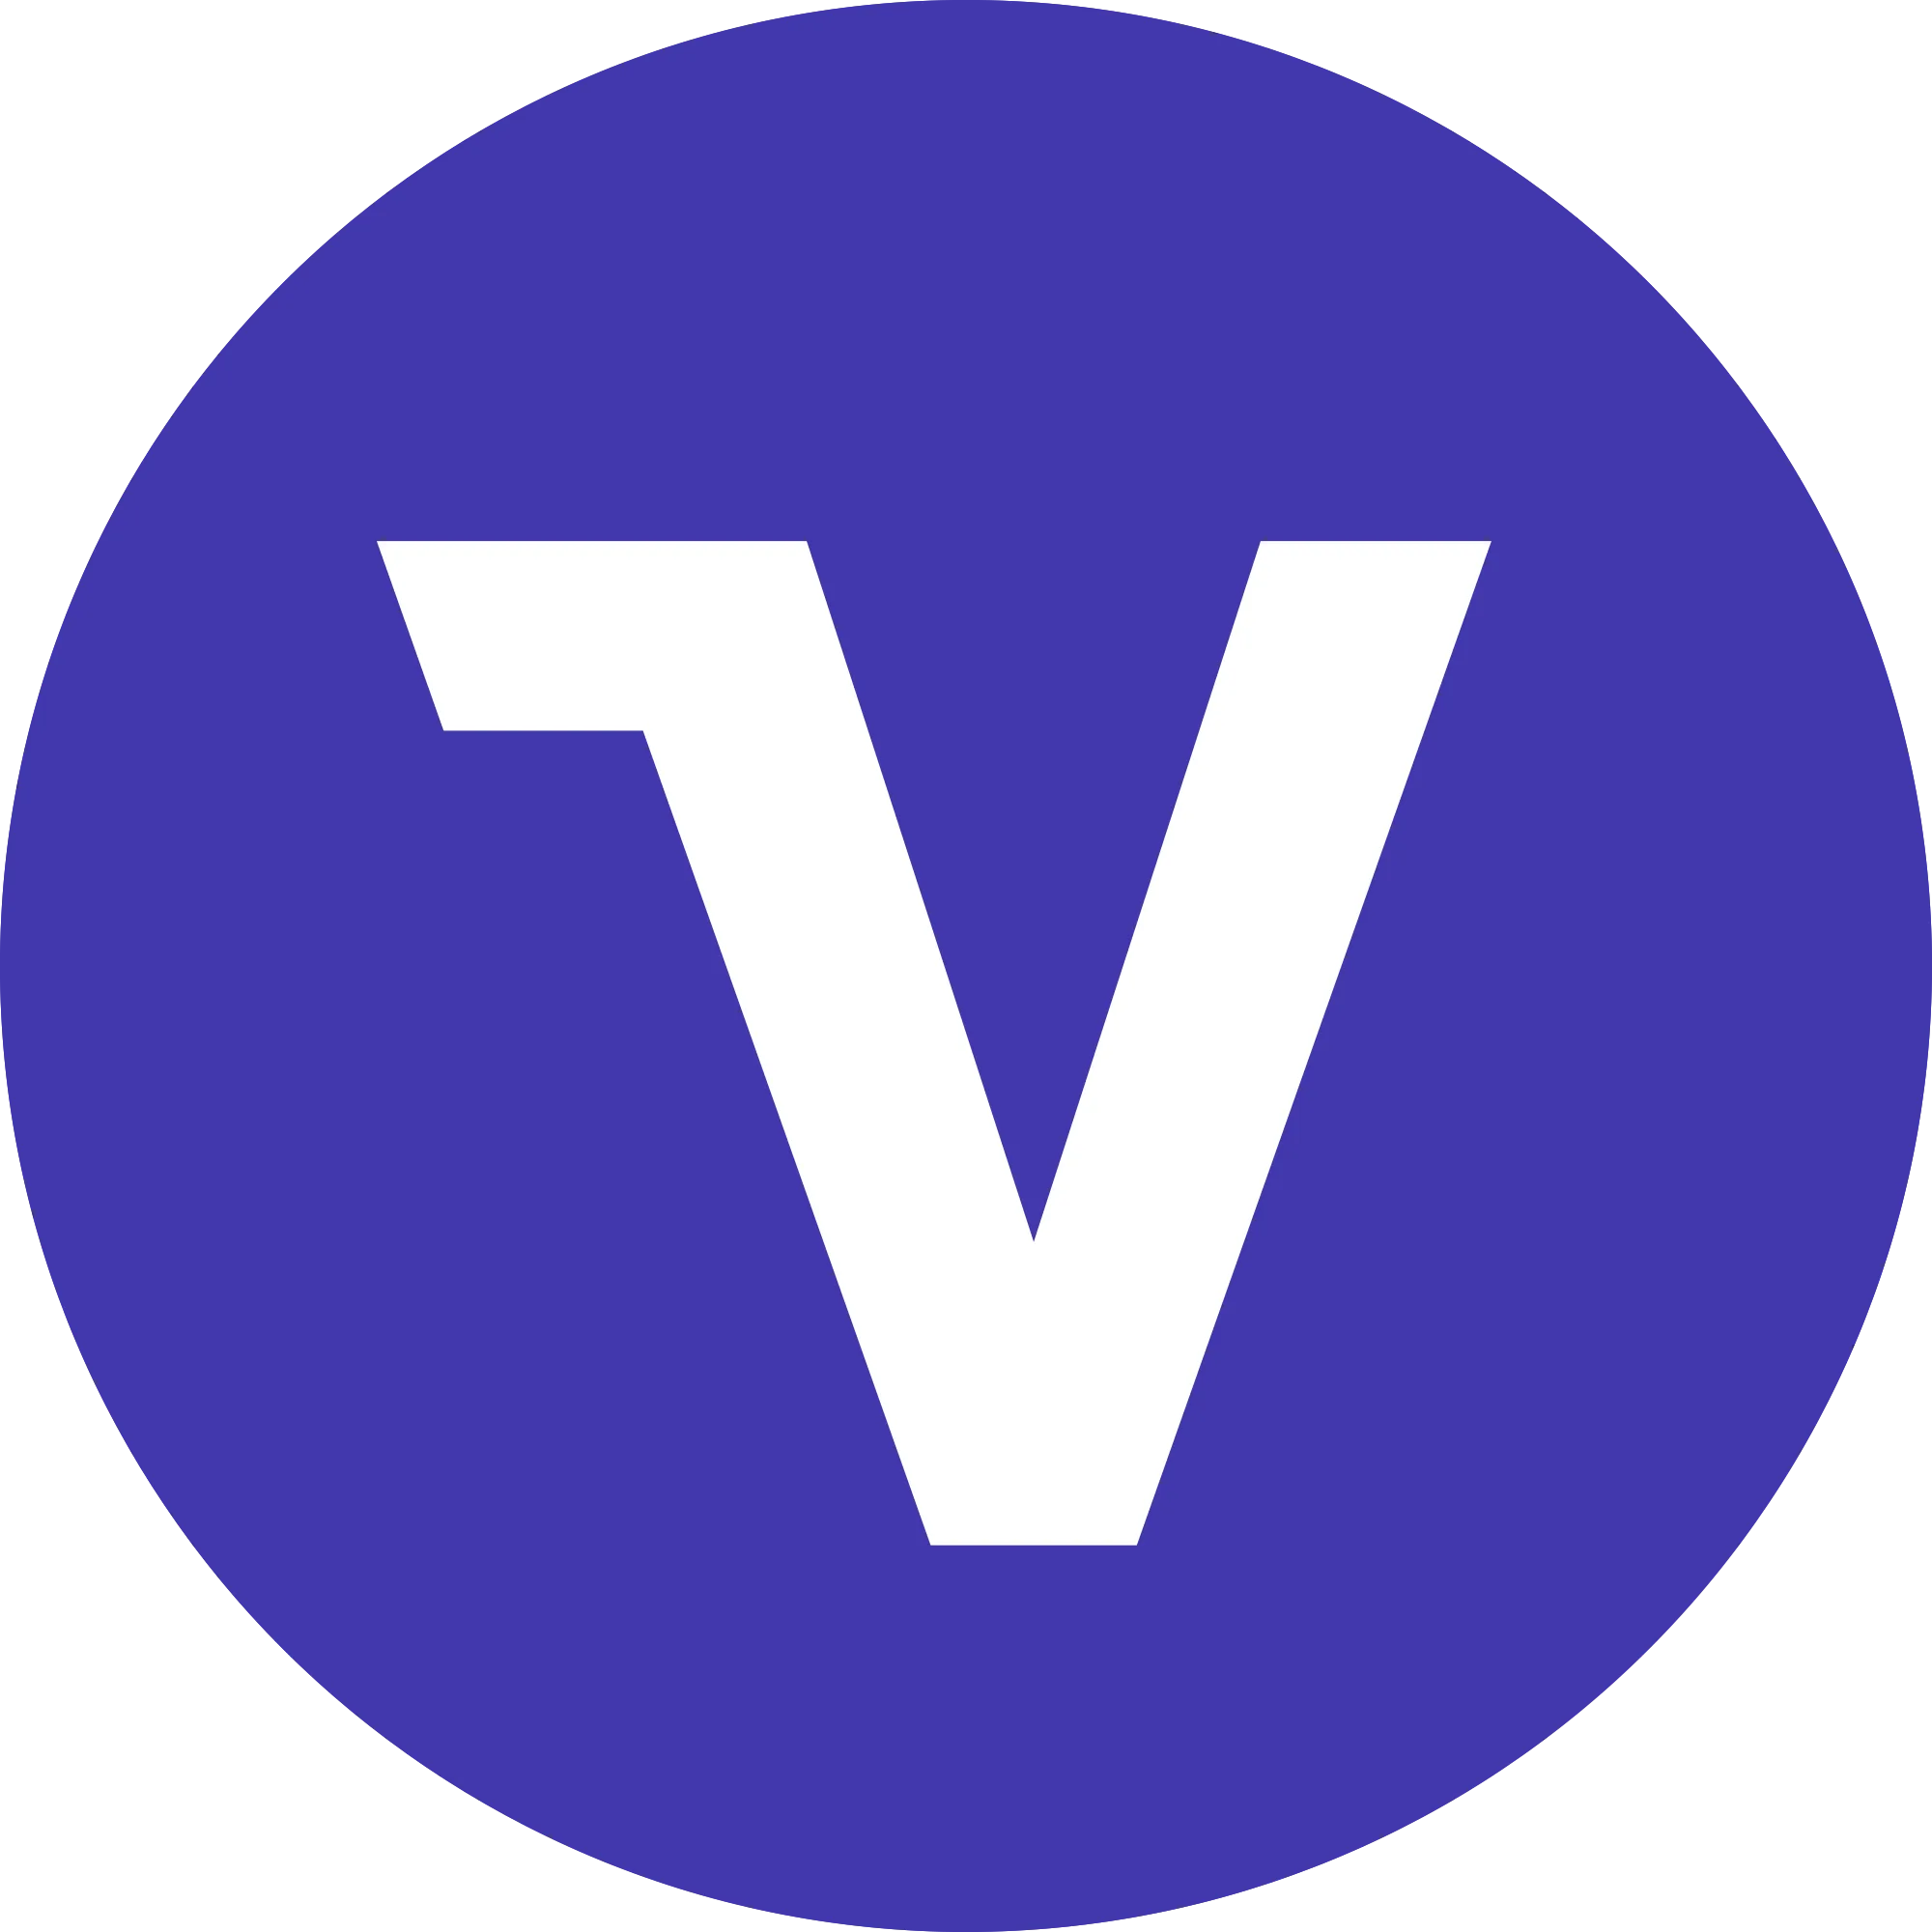 Vesper logo in png format